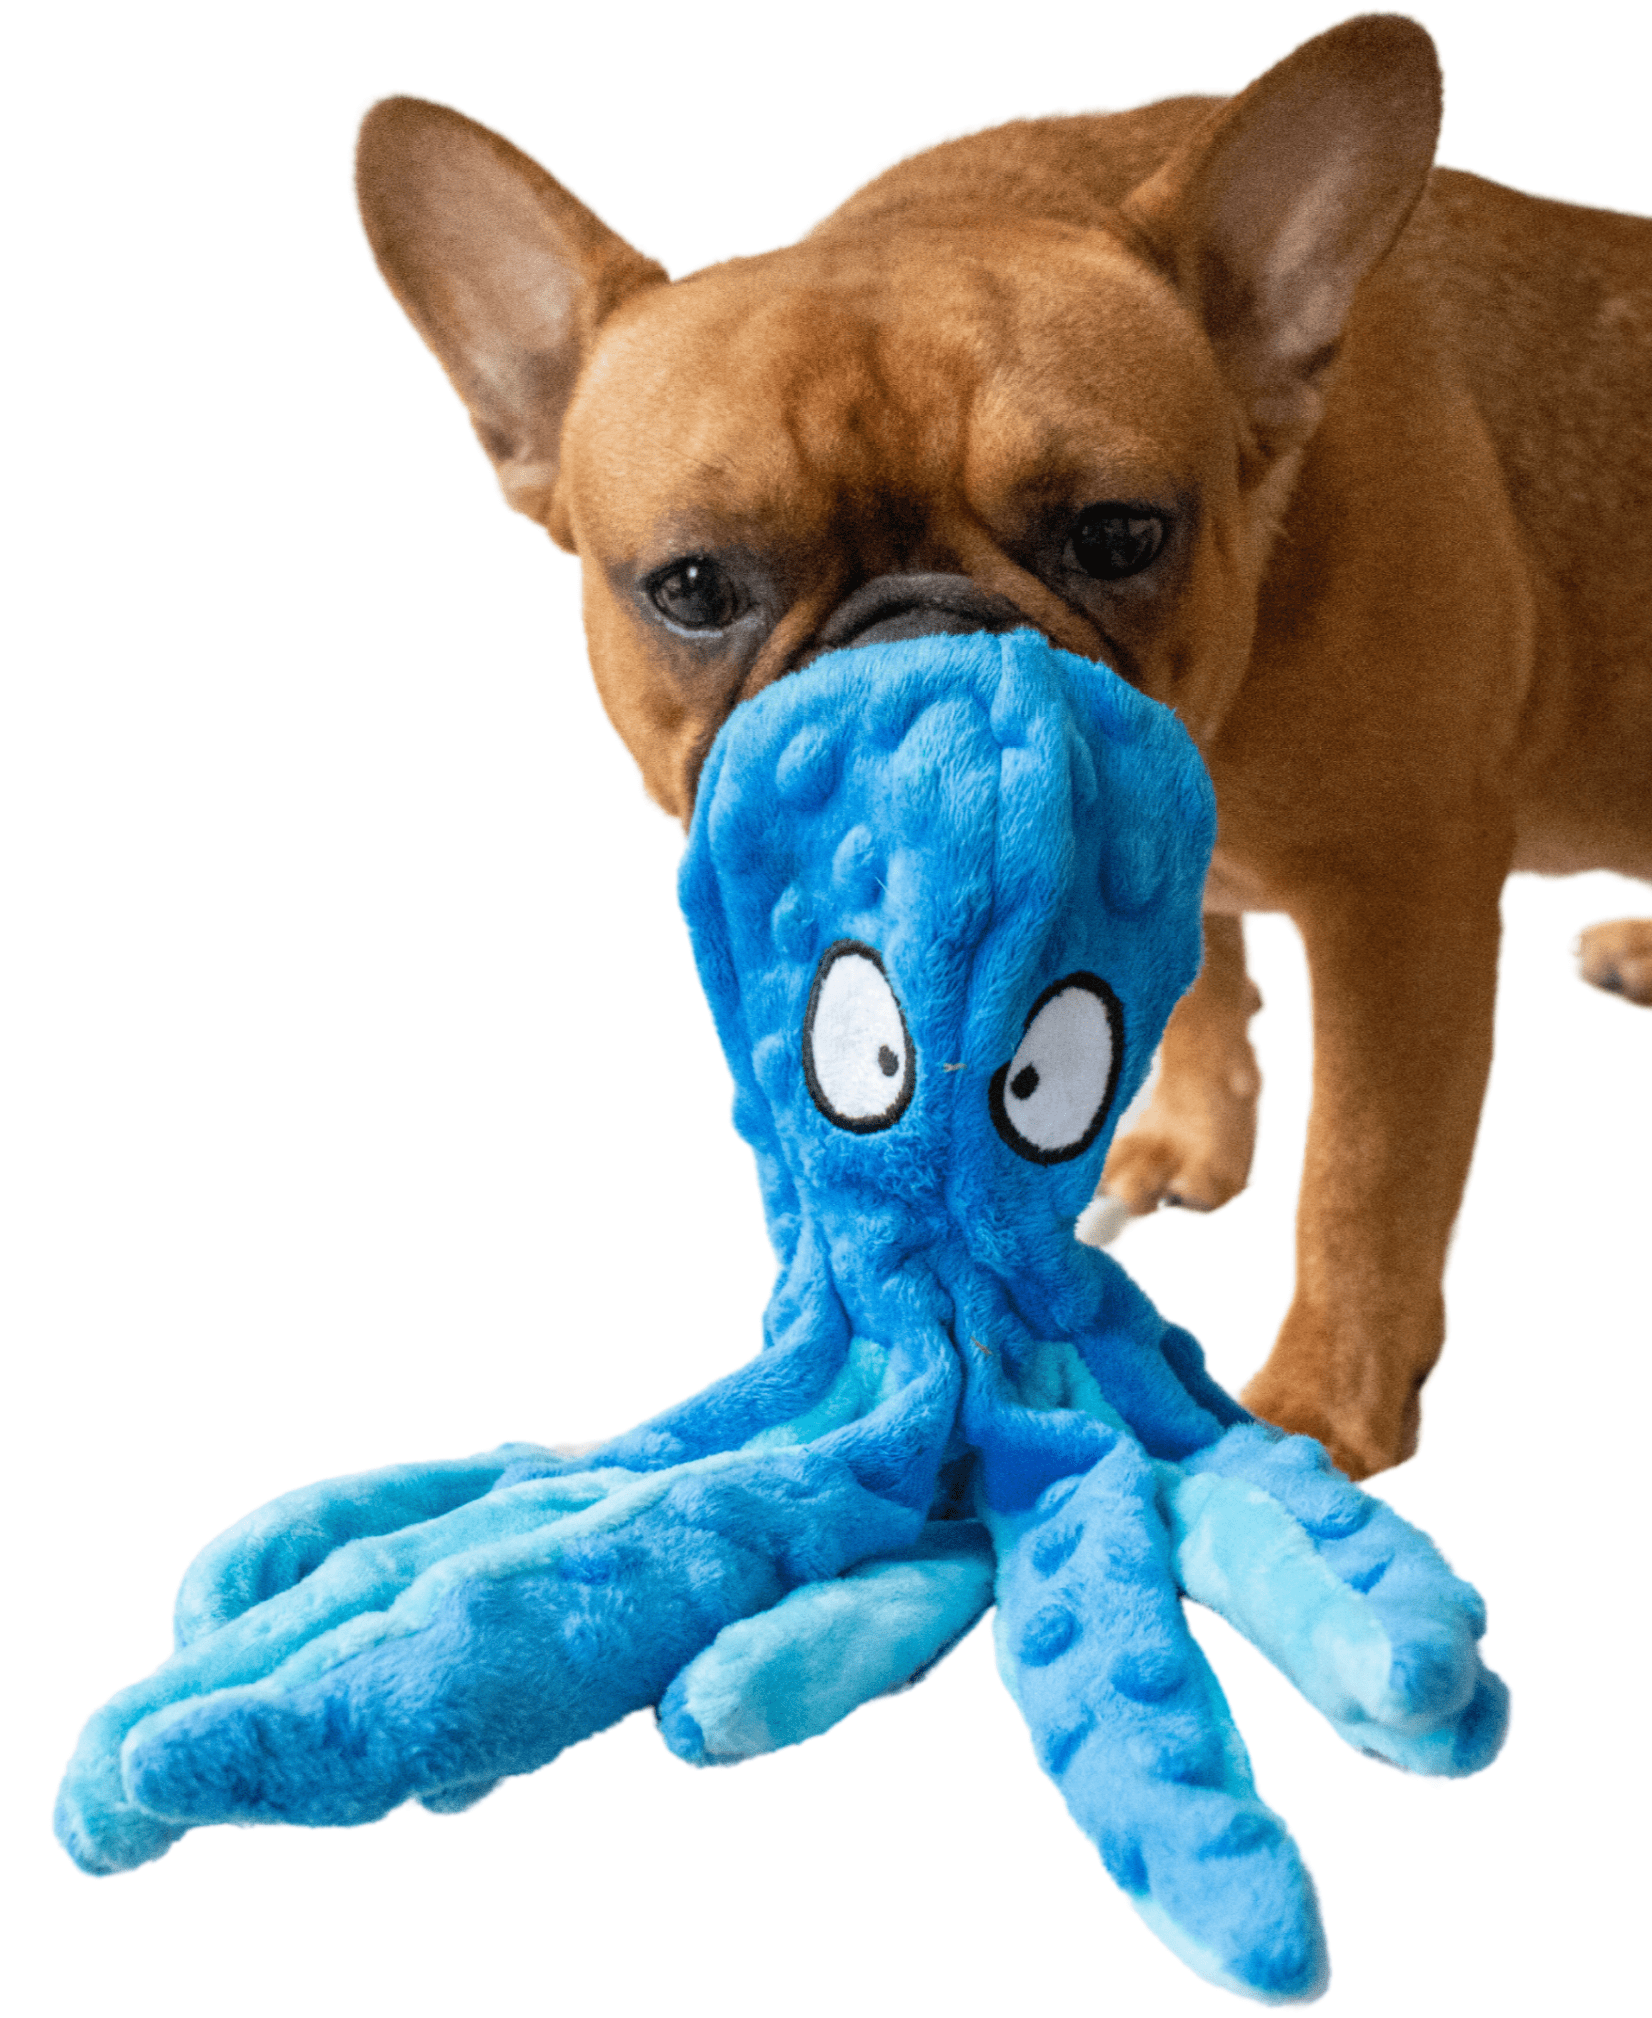 dog stuffed animals & plush toys